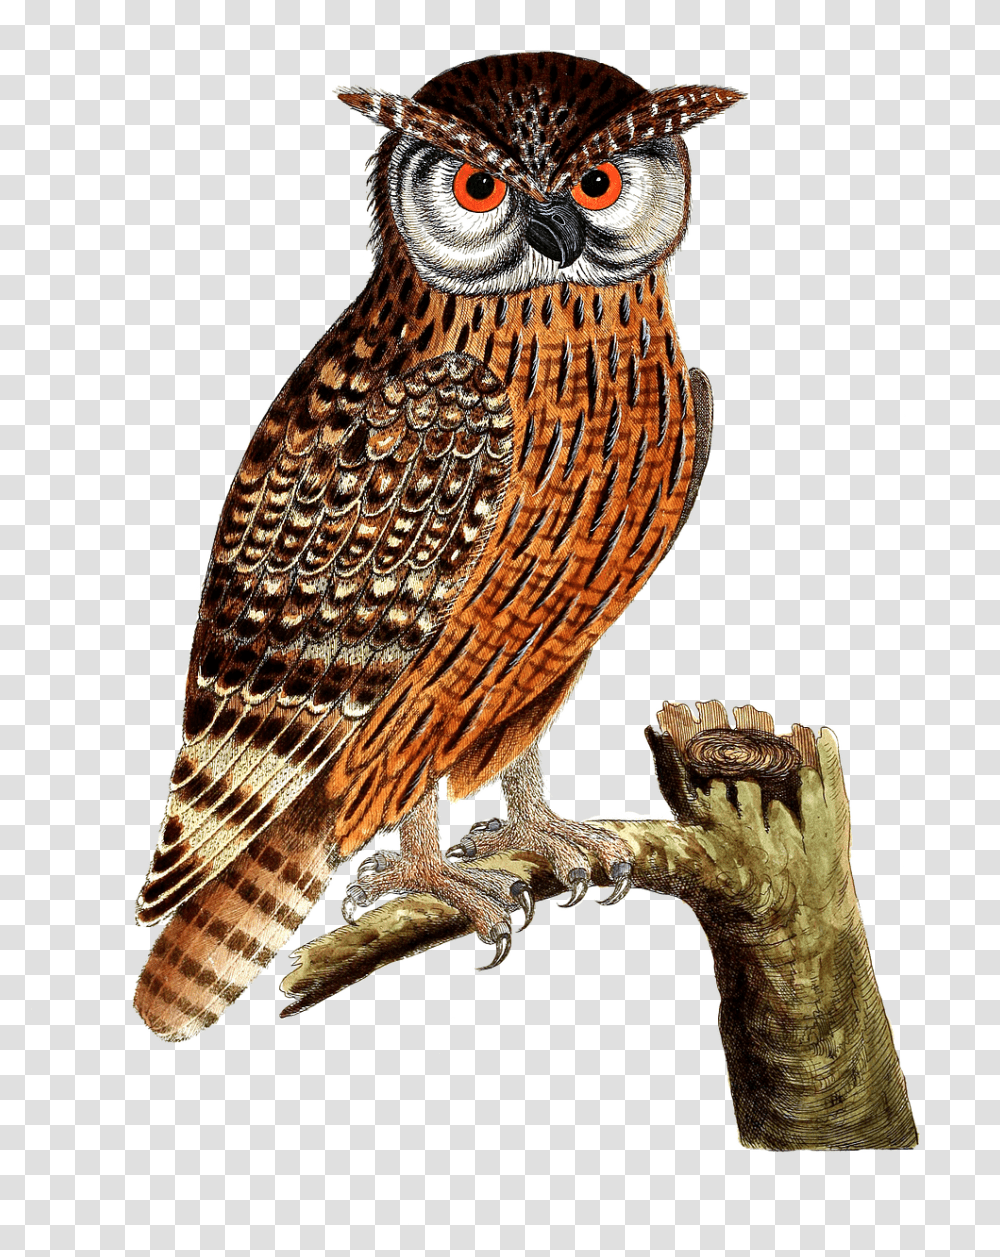 Owl Eagle Owl Bird Bird Of Prey Isolated Vintage Imagenes De Aves Buho, Animal Transparent Png